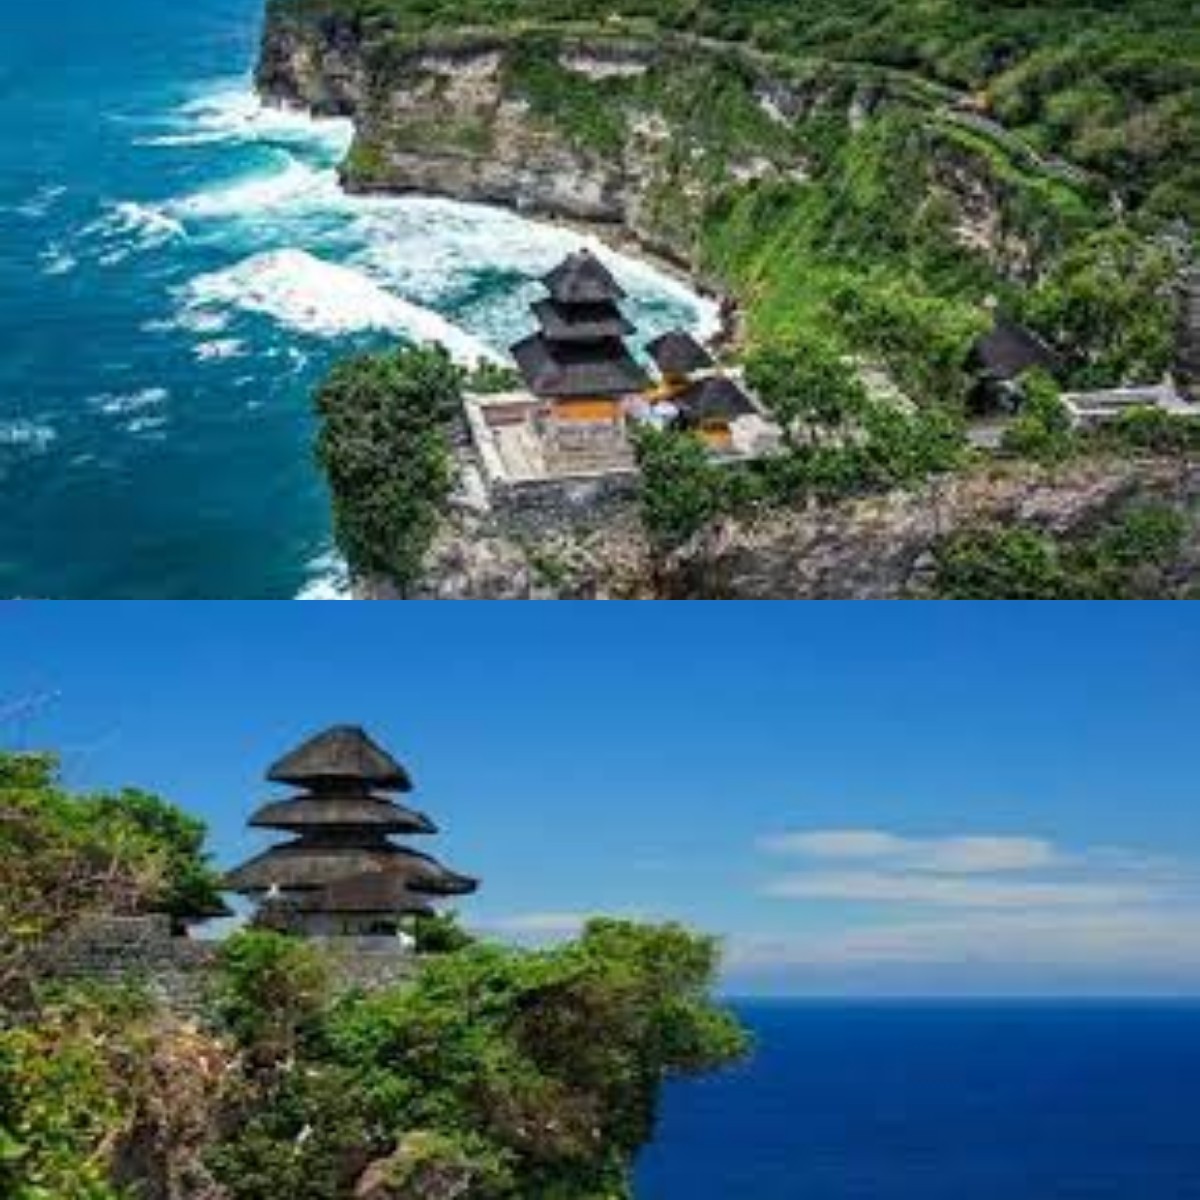 Inilah Sejarah Berdirinya Pura Uluwatu di Bali